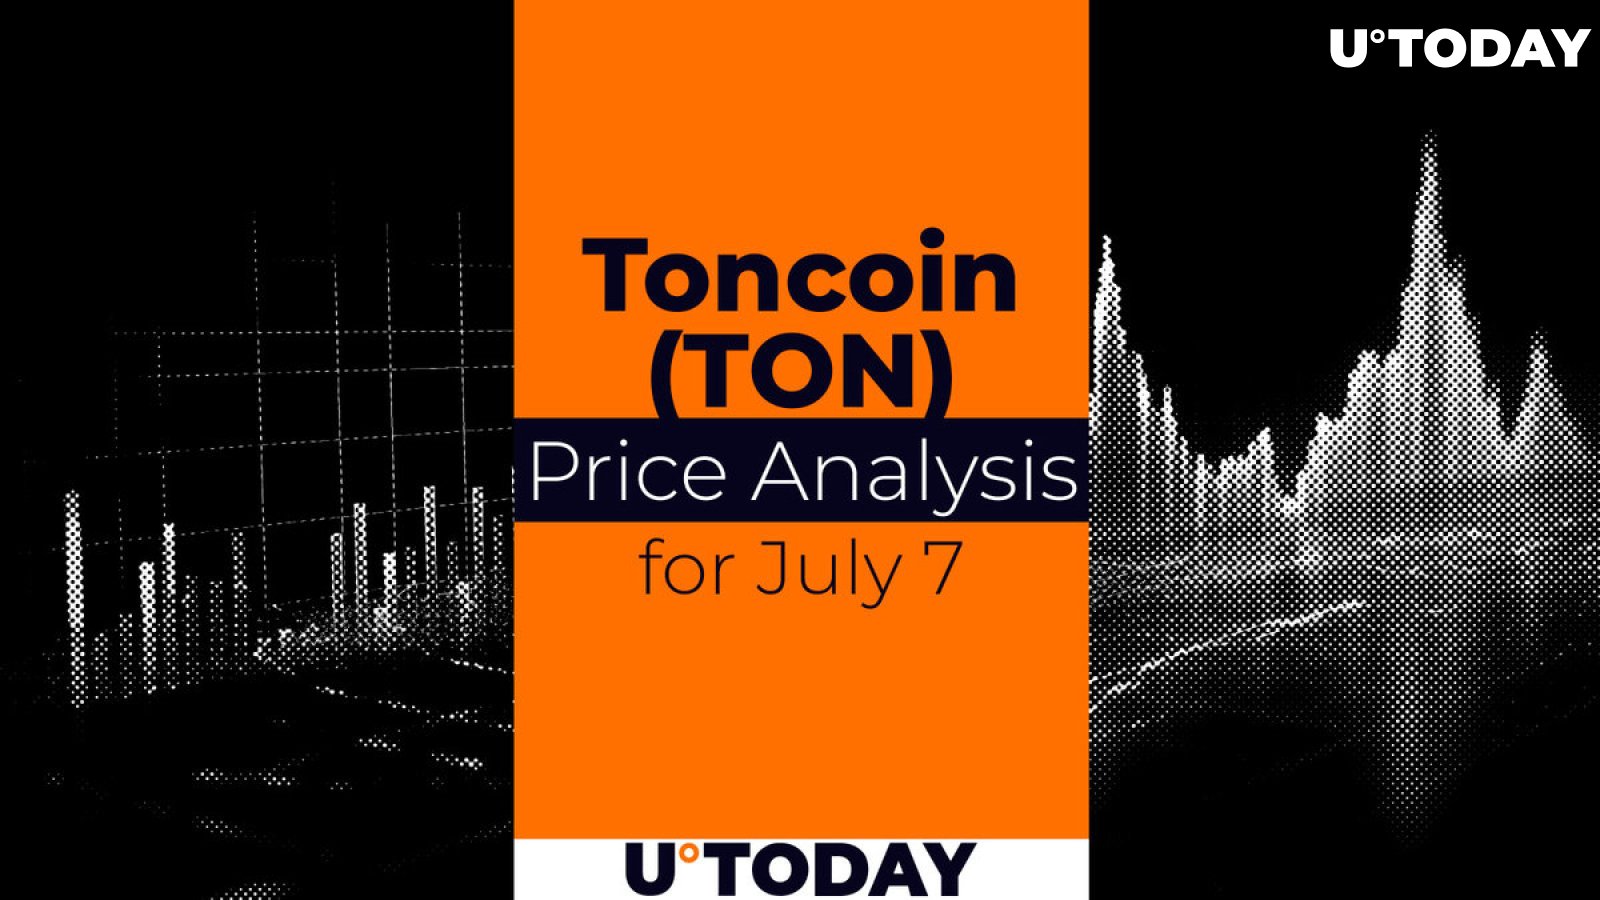 Toncoin (TON) Price Prediction for July 7